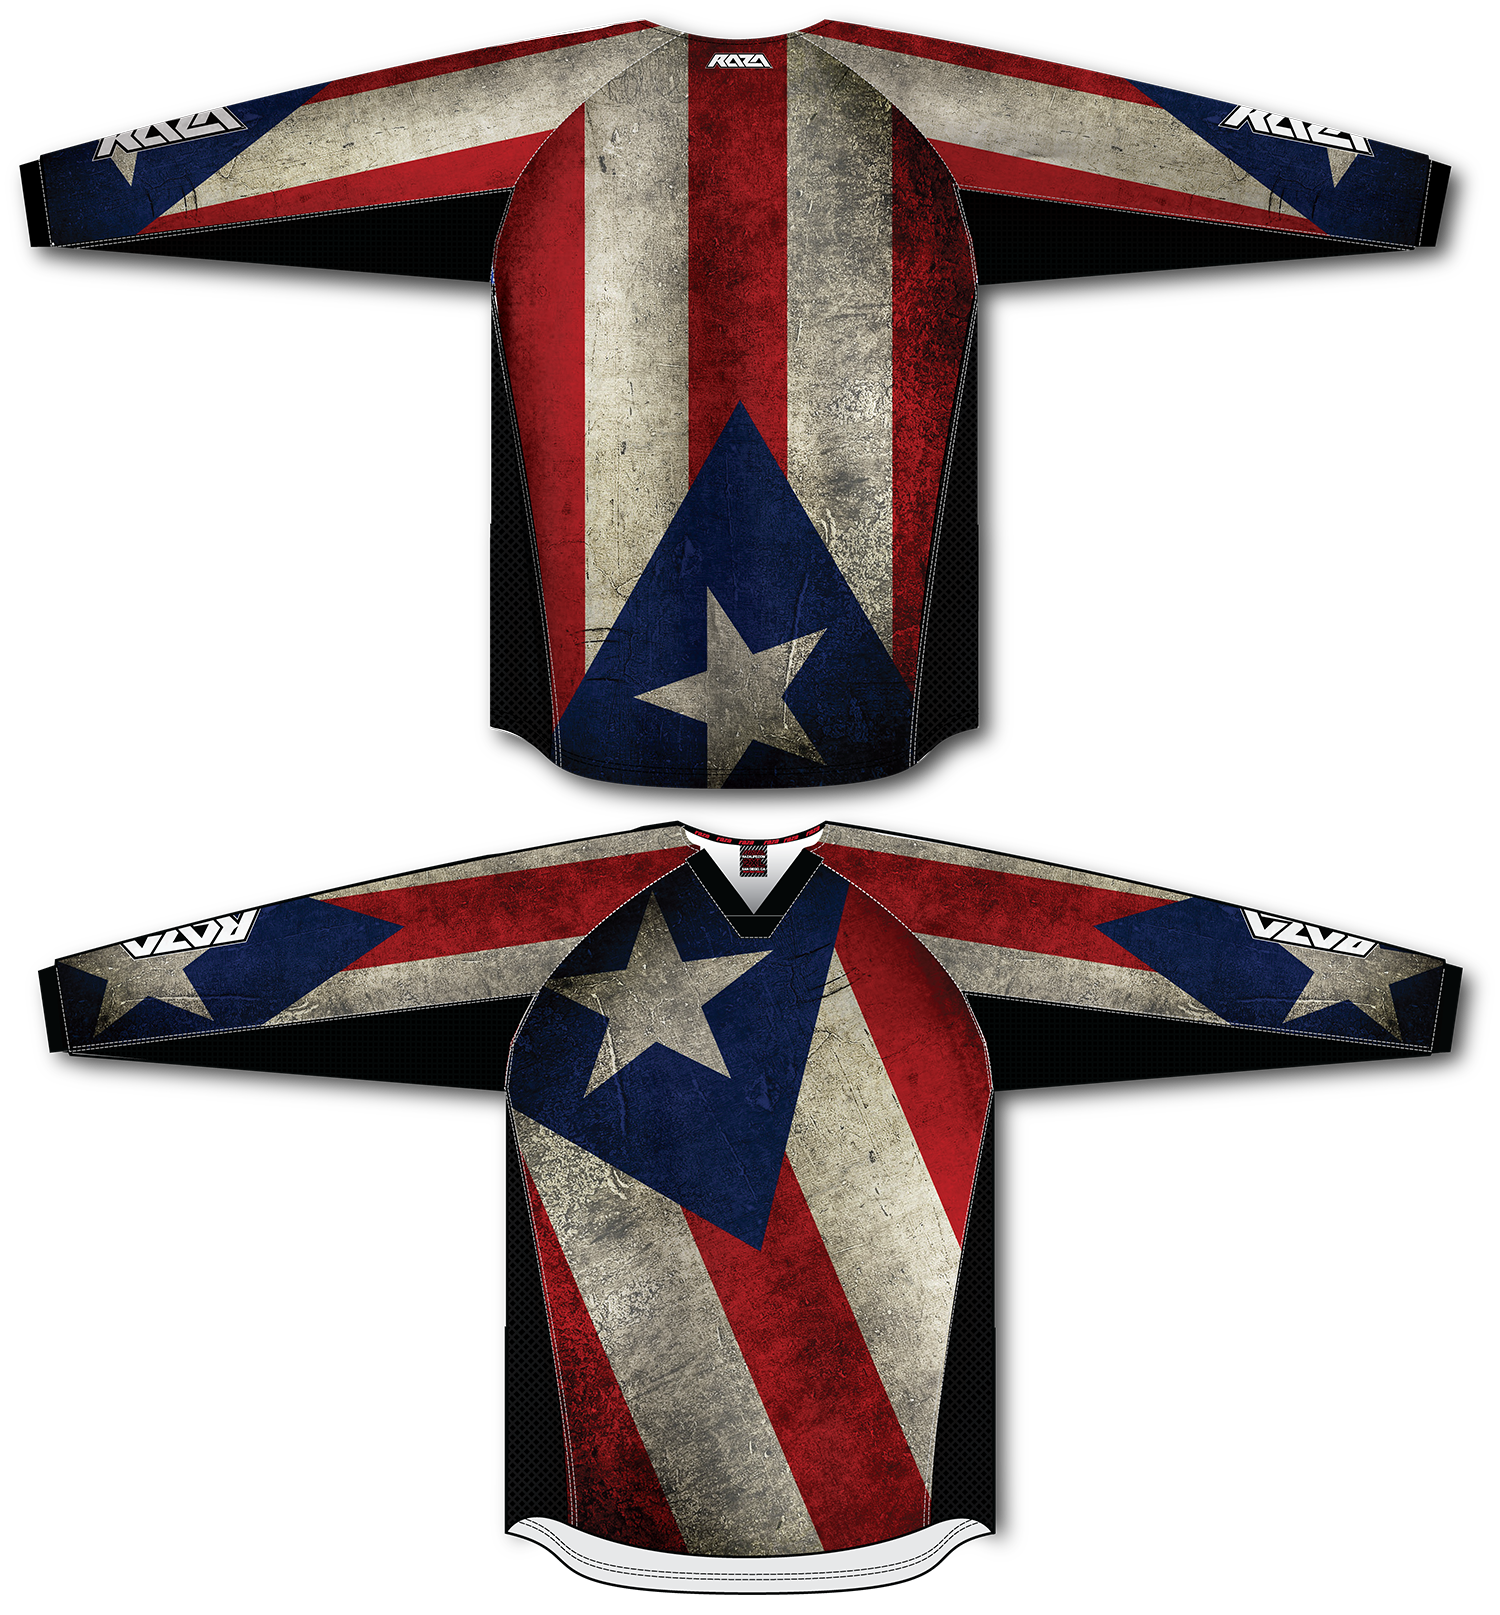 custom puerto rico jersey